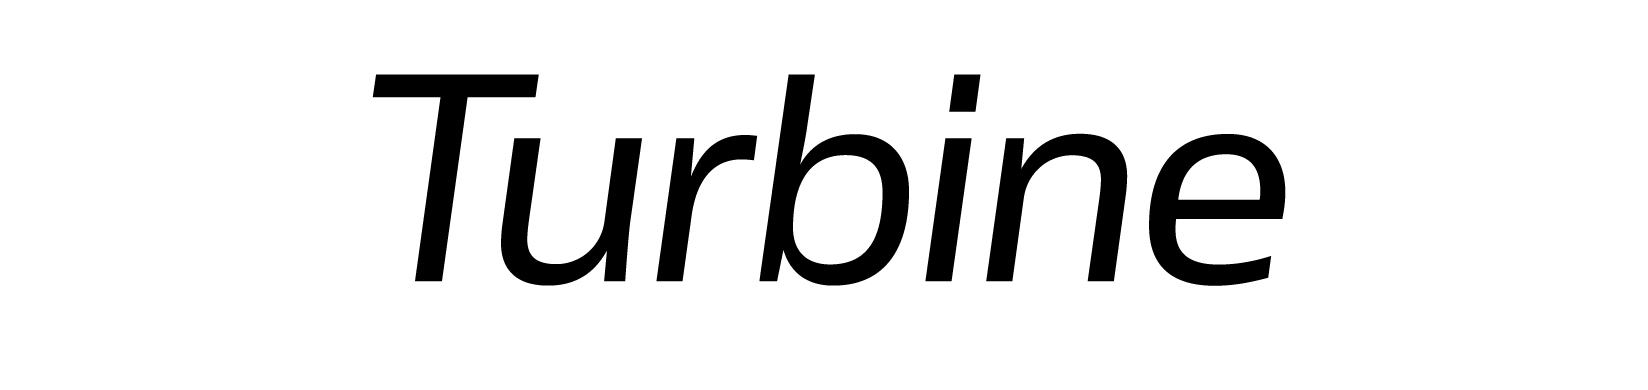 Turbine Typeface